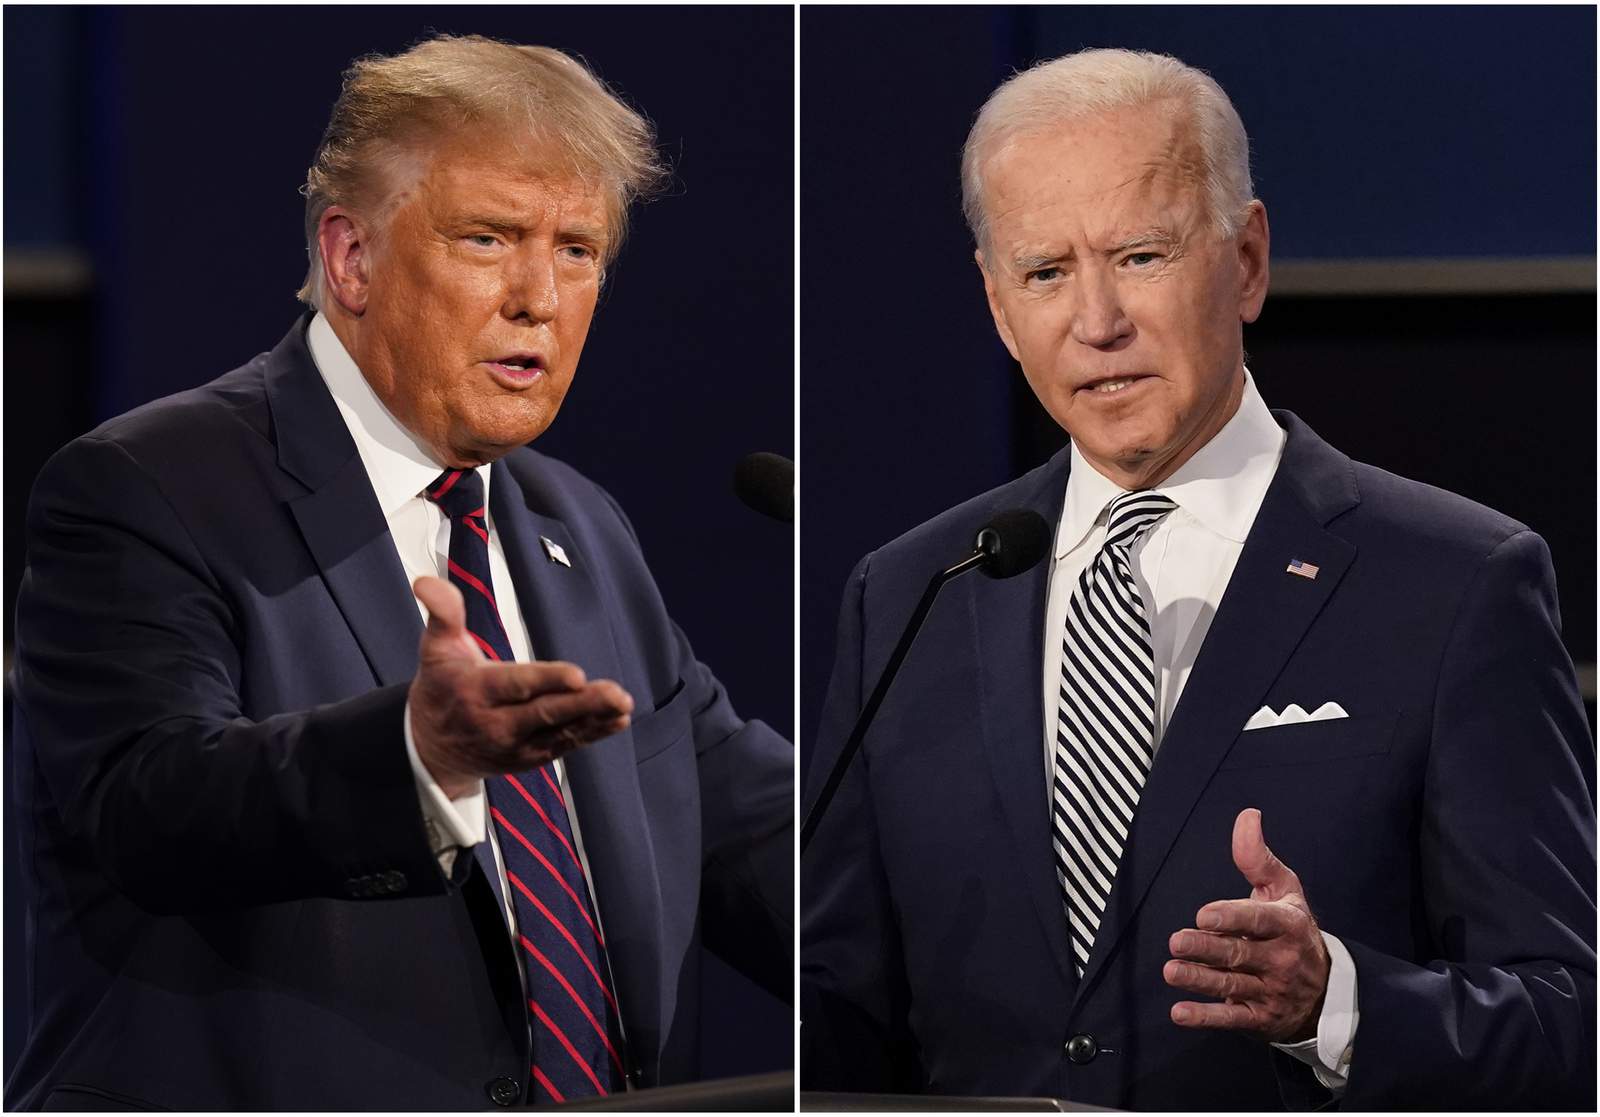 LIVE COVERAGE: Trump, Biden square off in final presidential debate